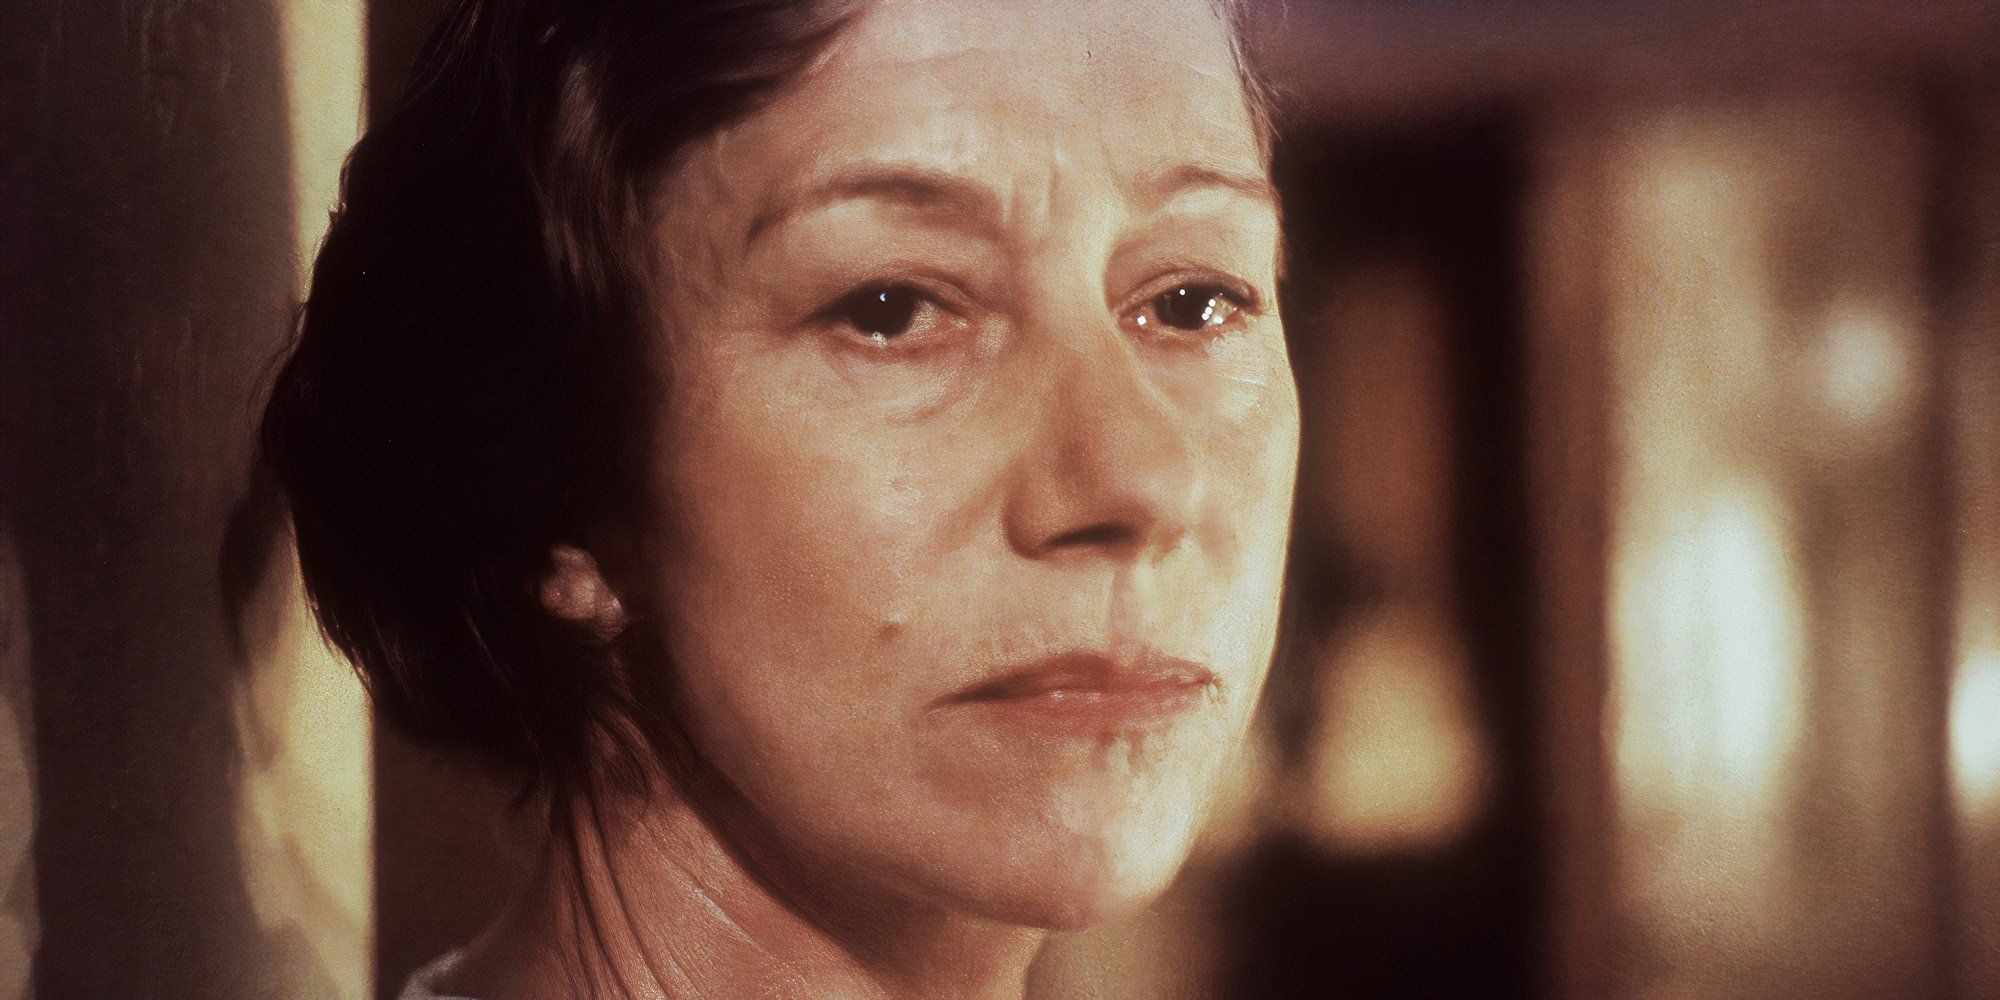 Helen Mirren as Mrs. Wilson with a sad expression in Gosford Park.